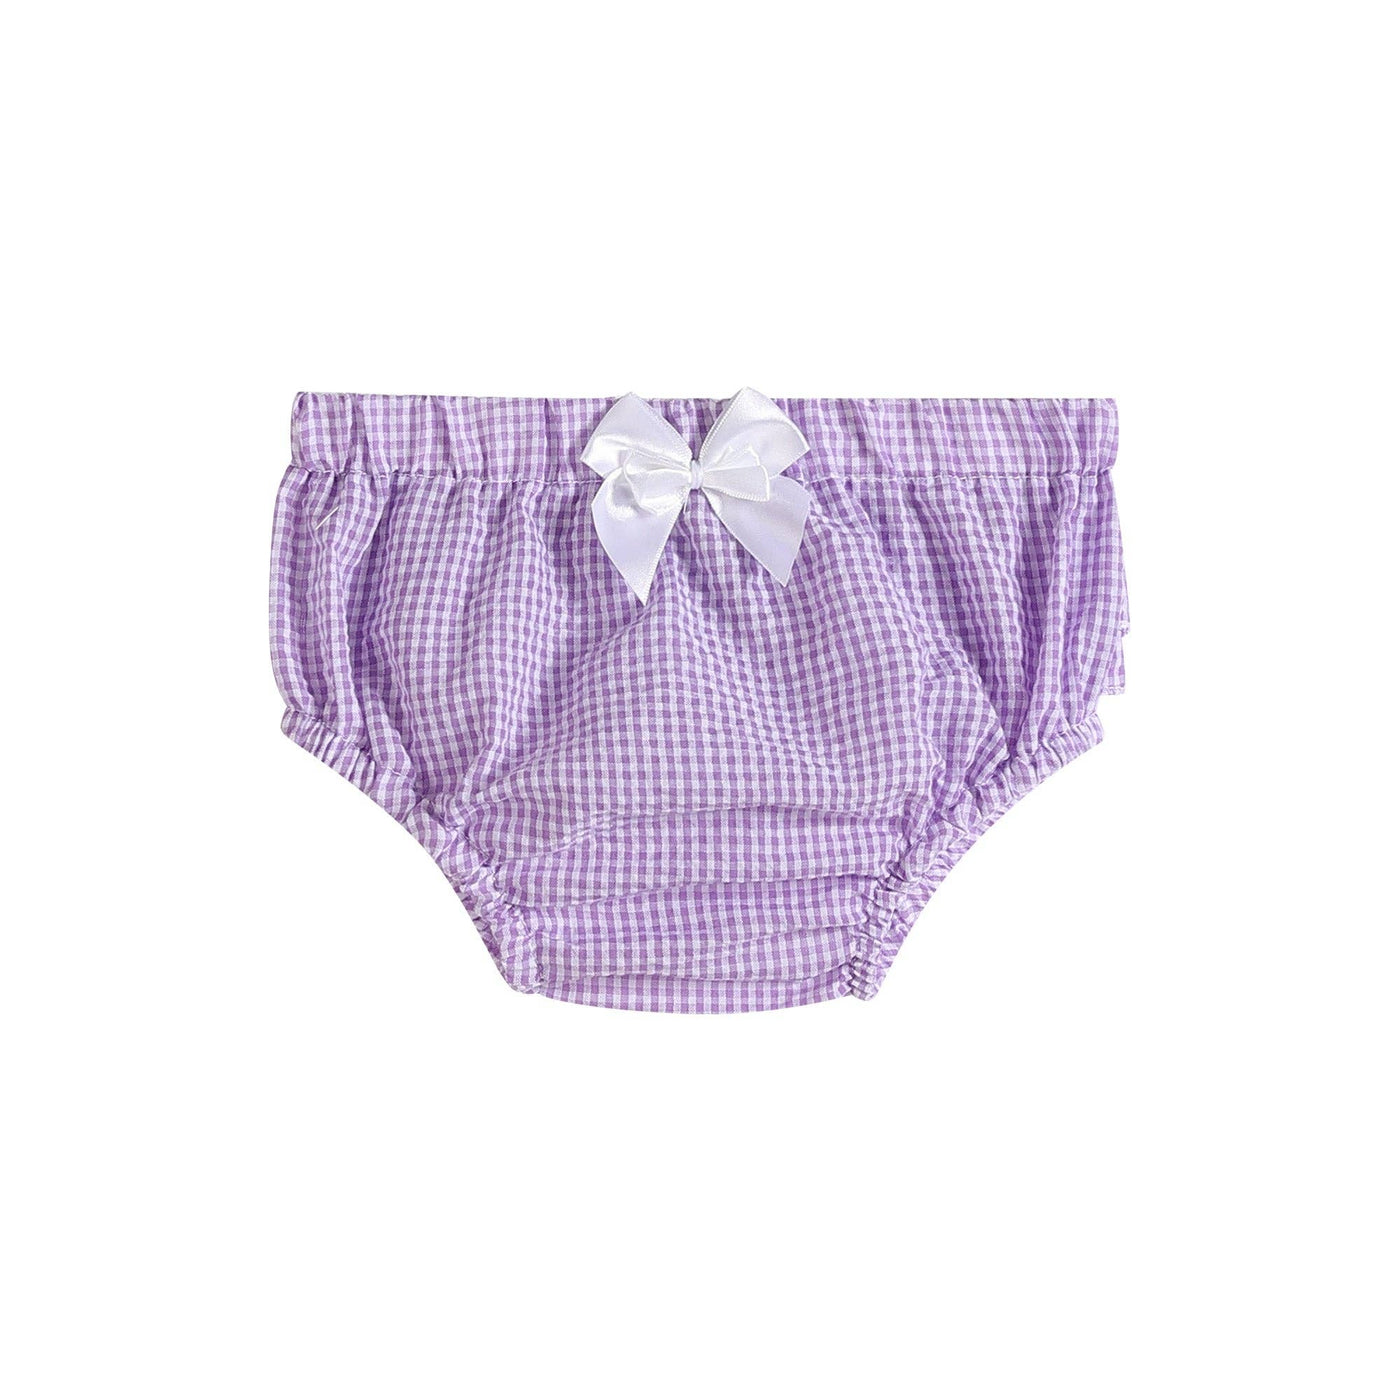 2 pc Set Pink and Purple Seersucker Cotton Baby Bloomer